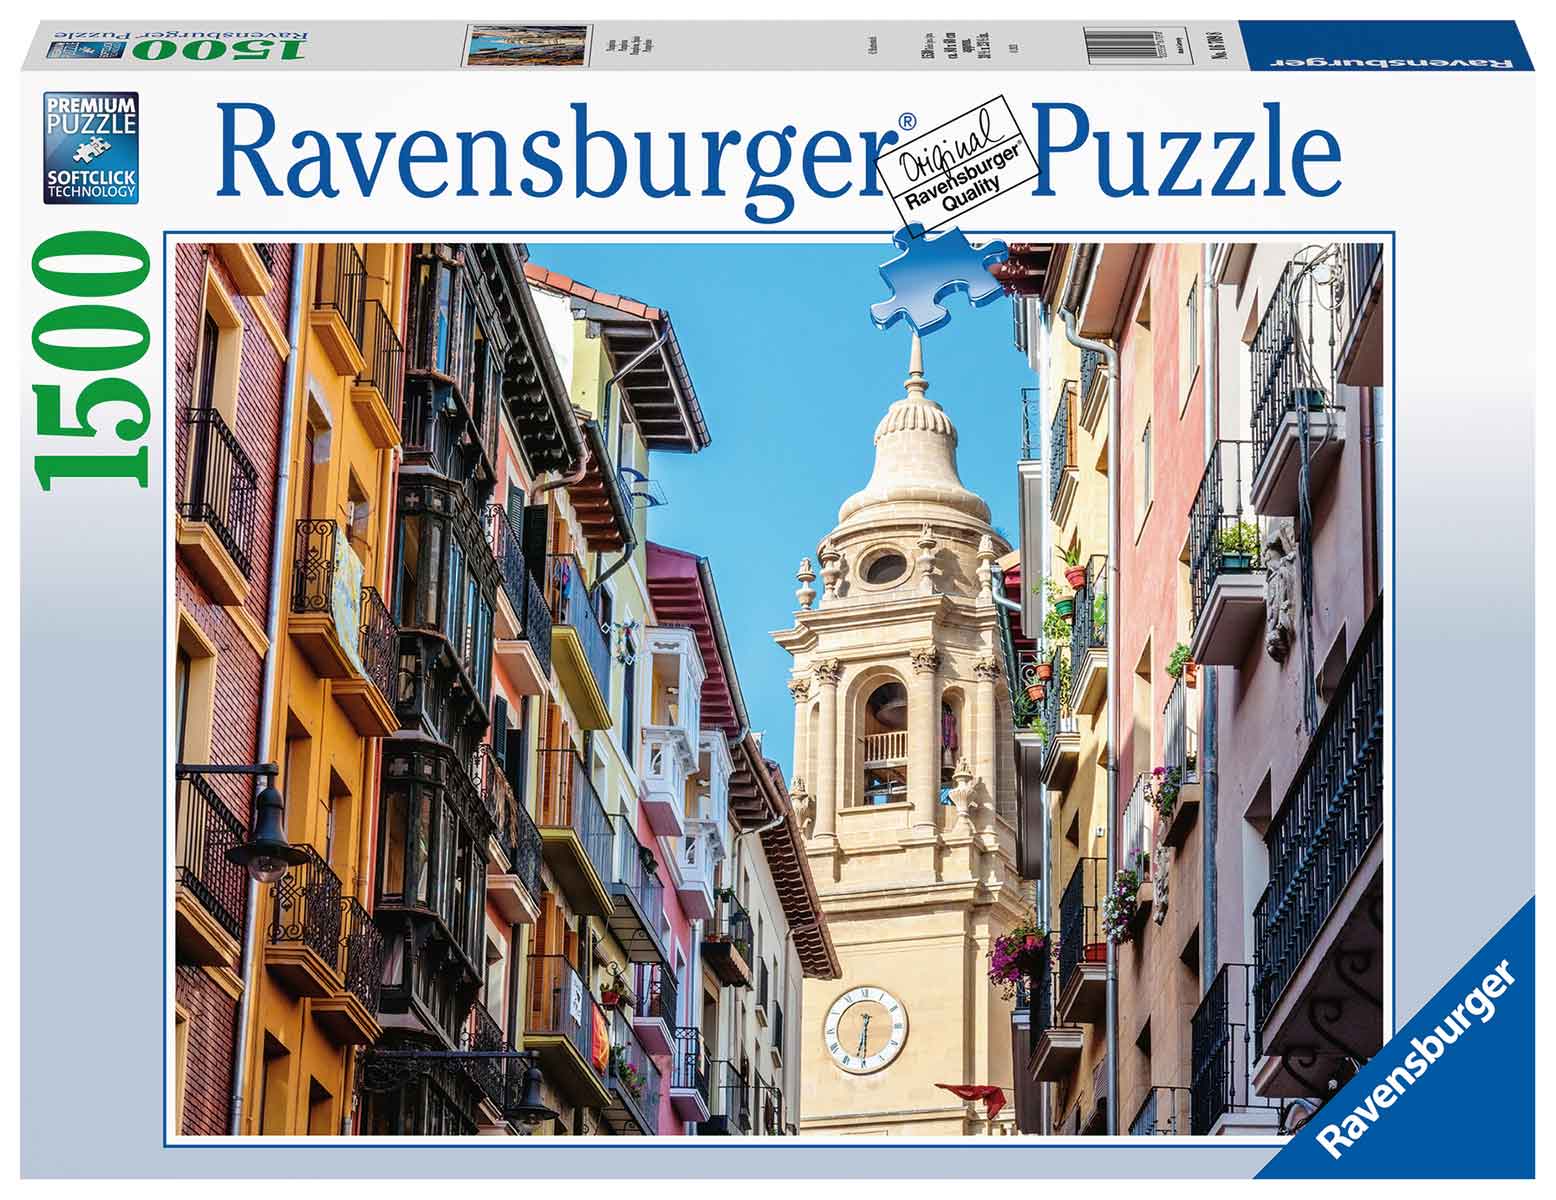 Puzzle Ravensburger Pamplona 1500 peças